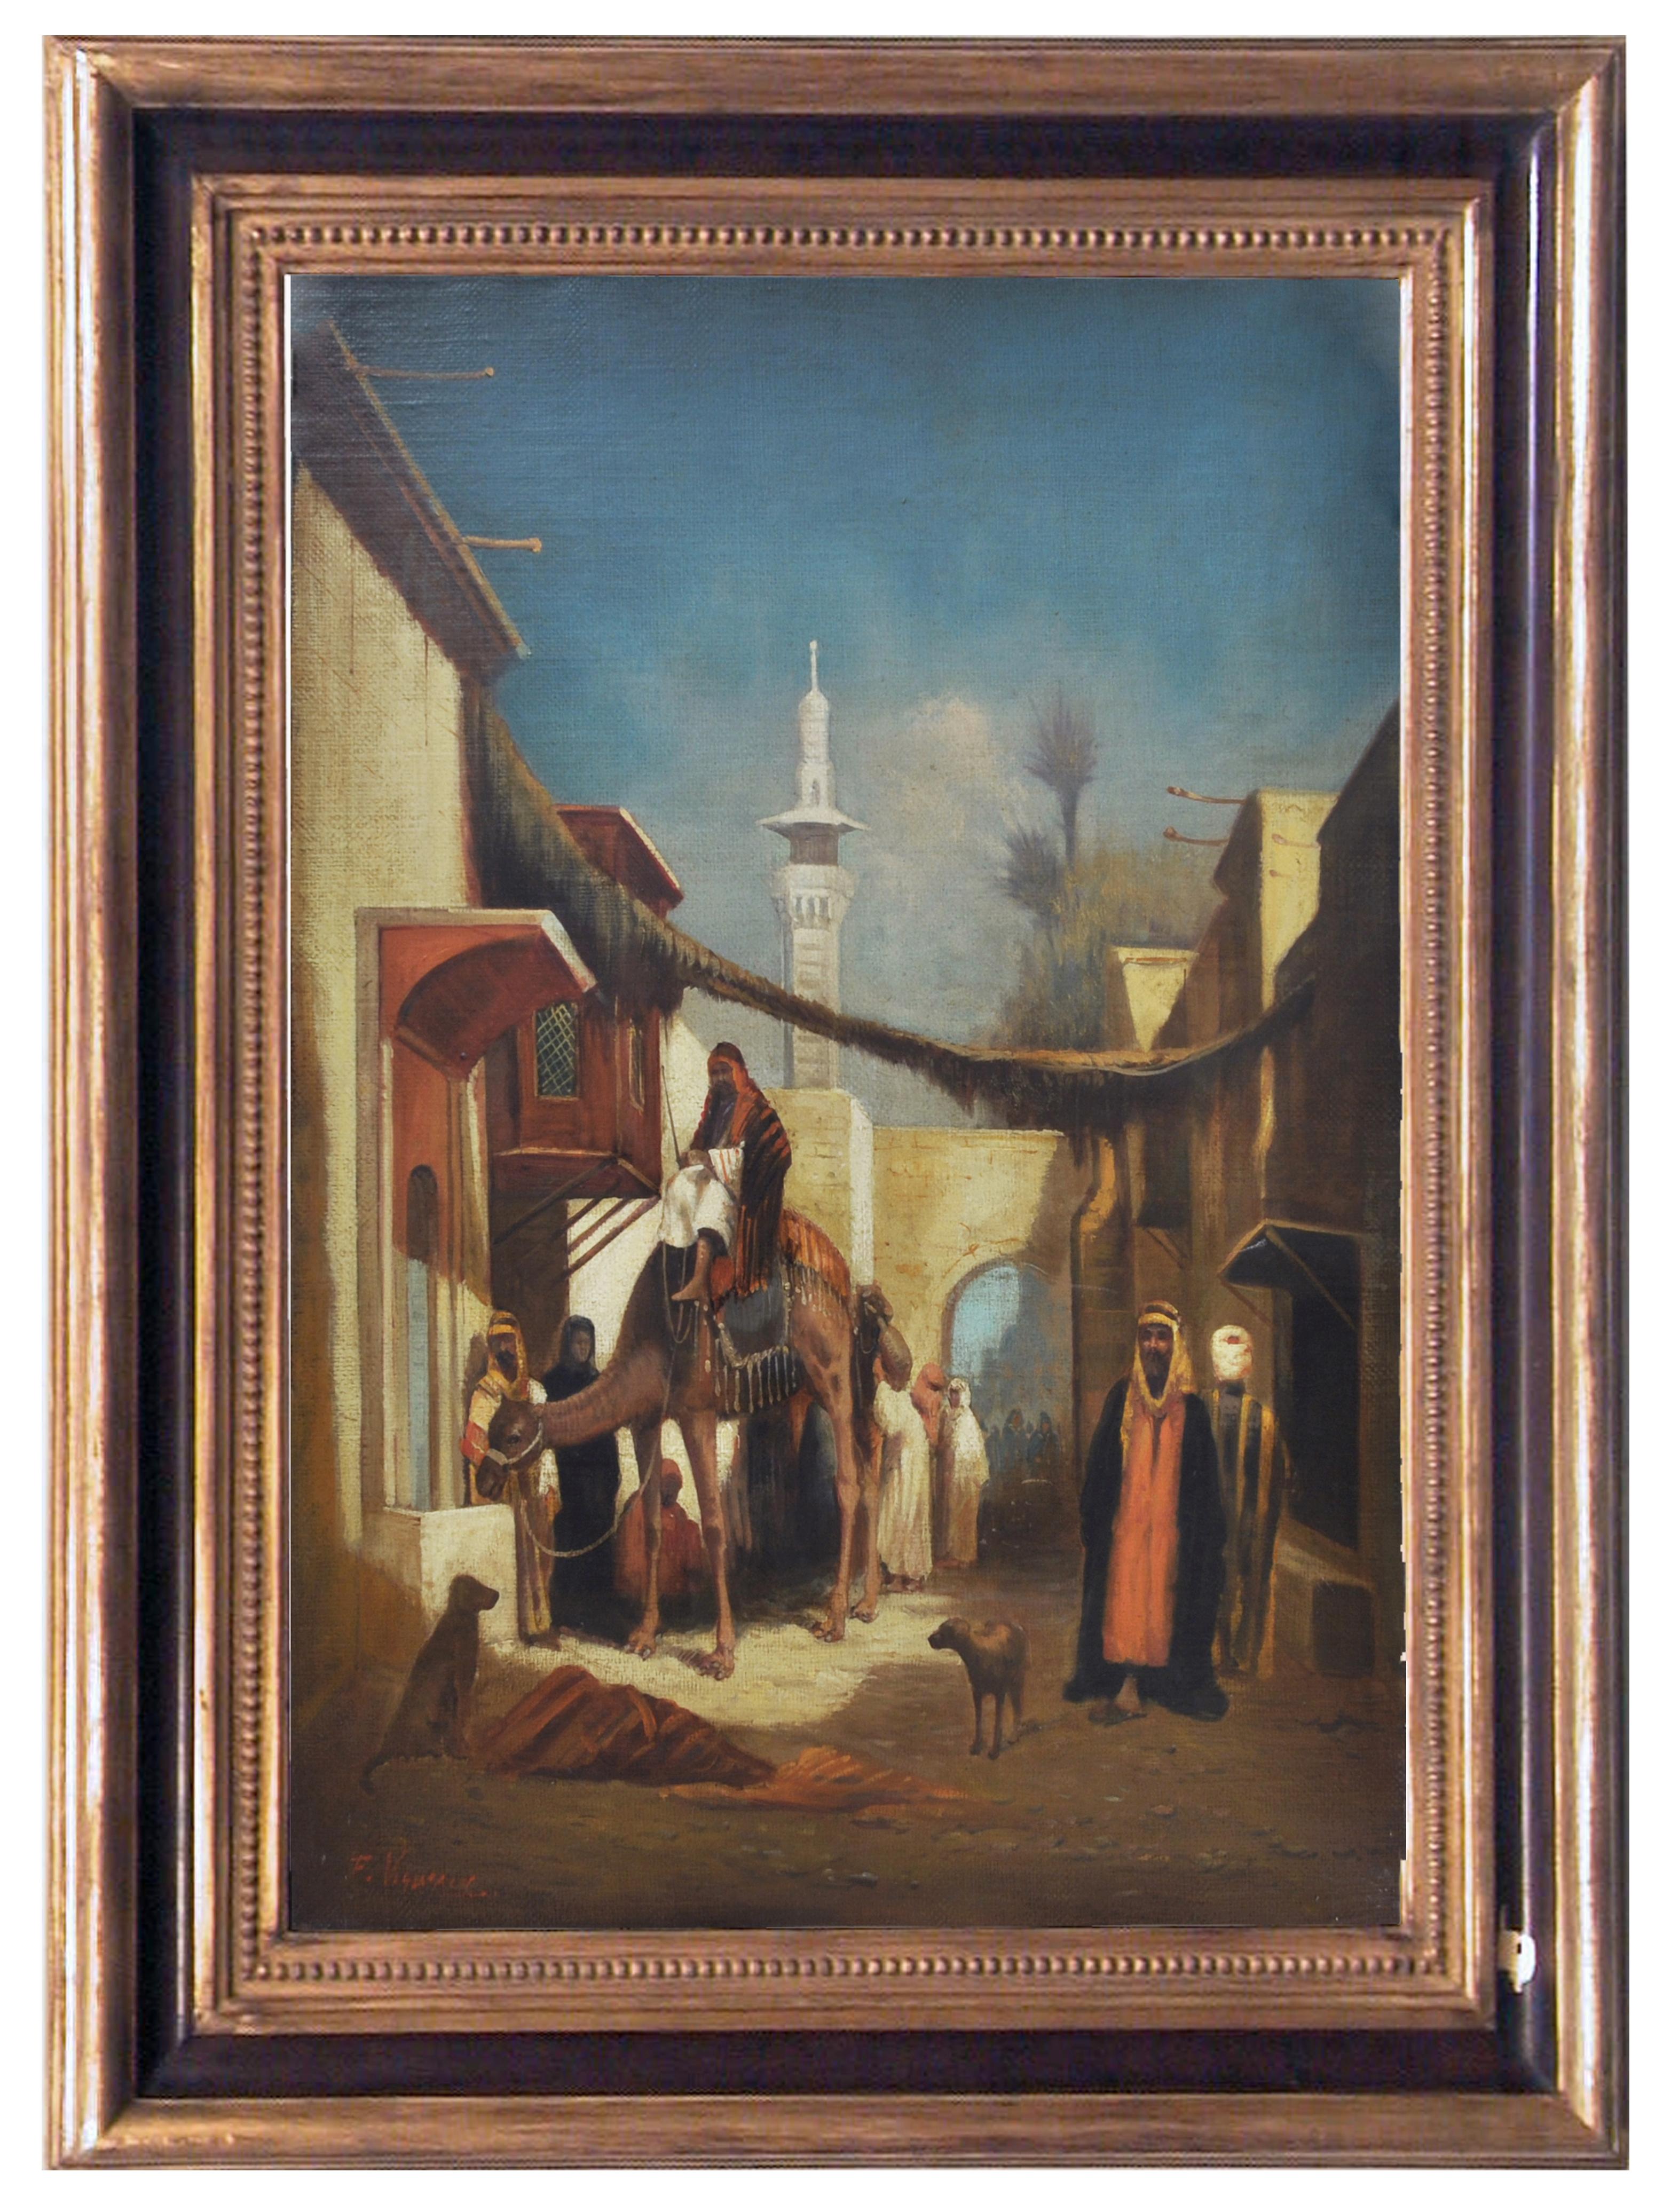 ARABIAN SCENE - Vigneron landscape oil on canvas painting - Painting by Francoise Vigneron